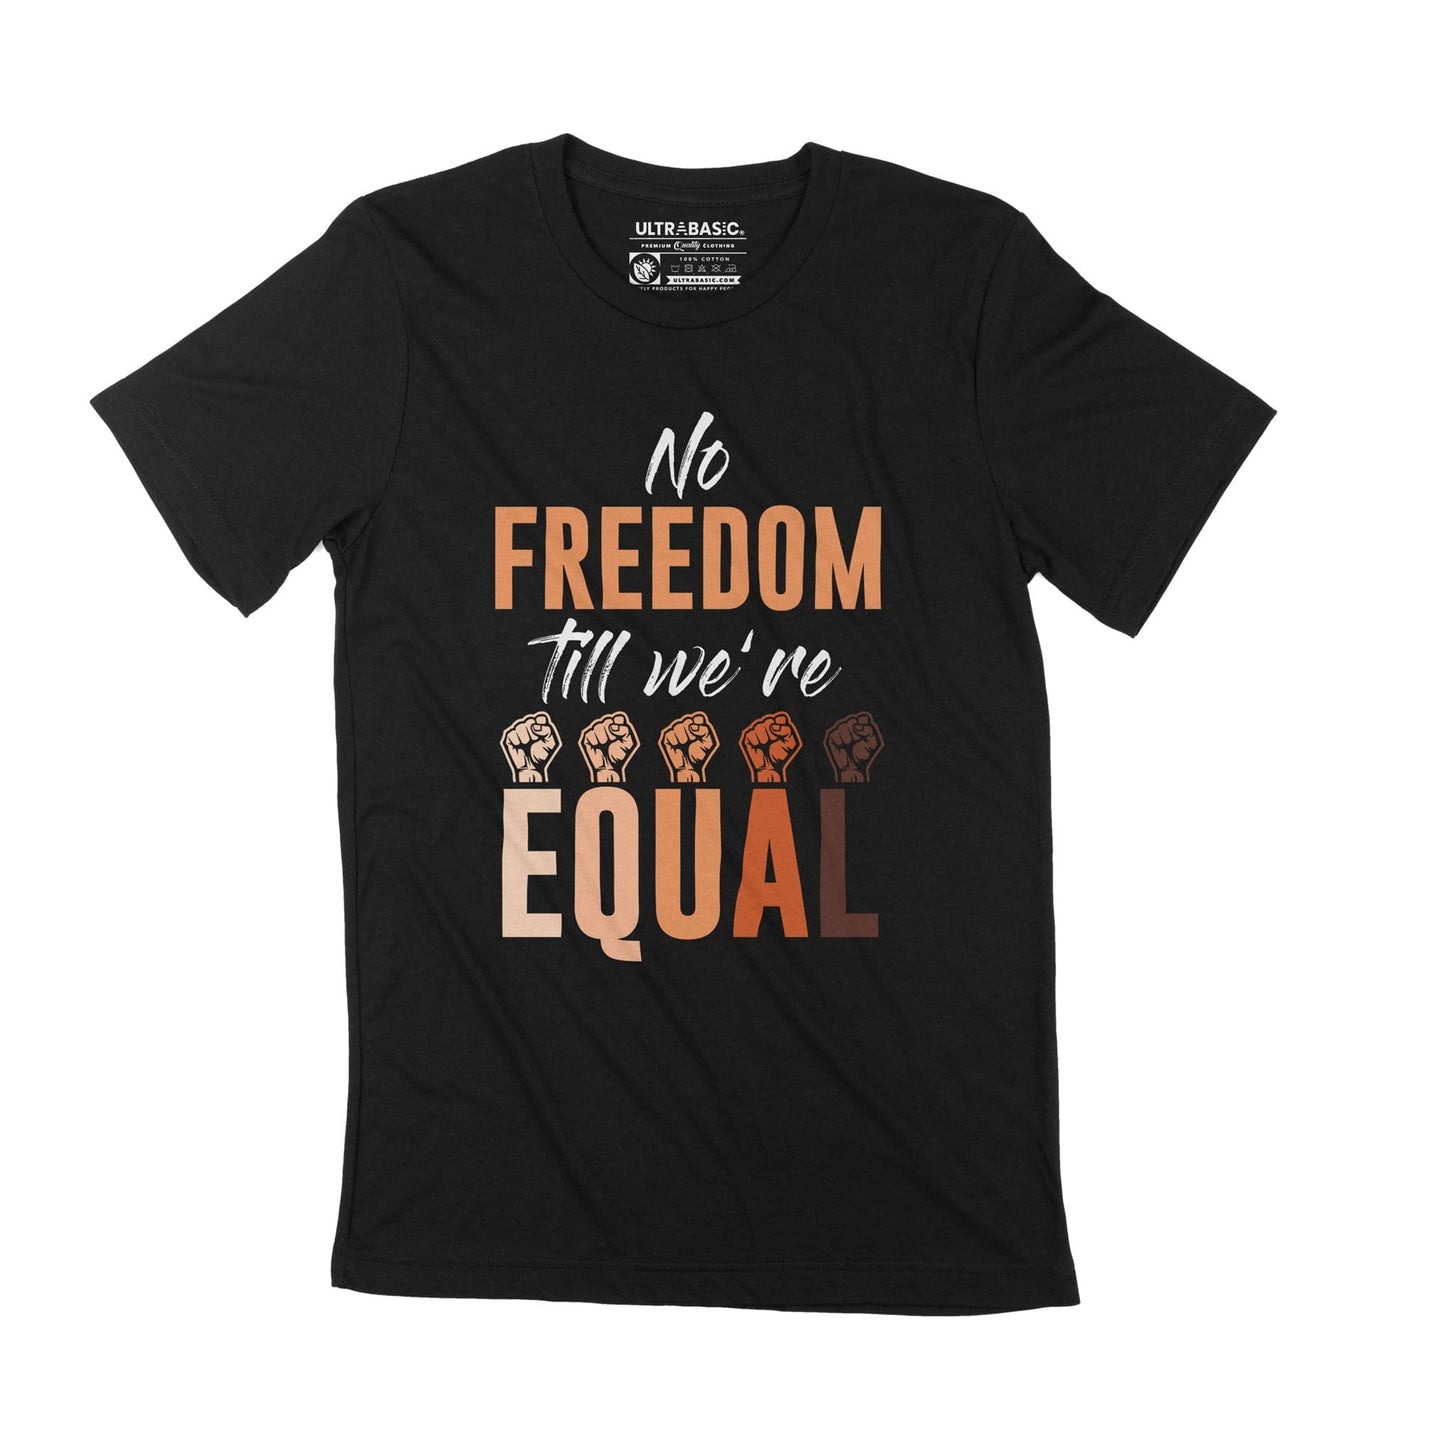 Unisex Adult T-Shirt No Freedom Till We're Equal Black Lives Matter BLM Shirt